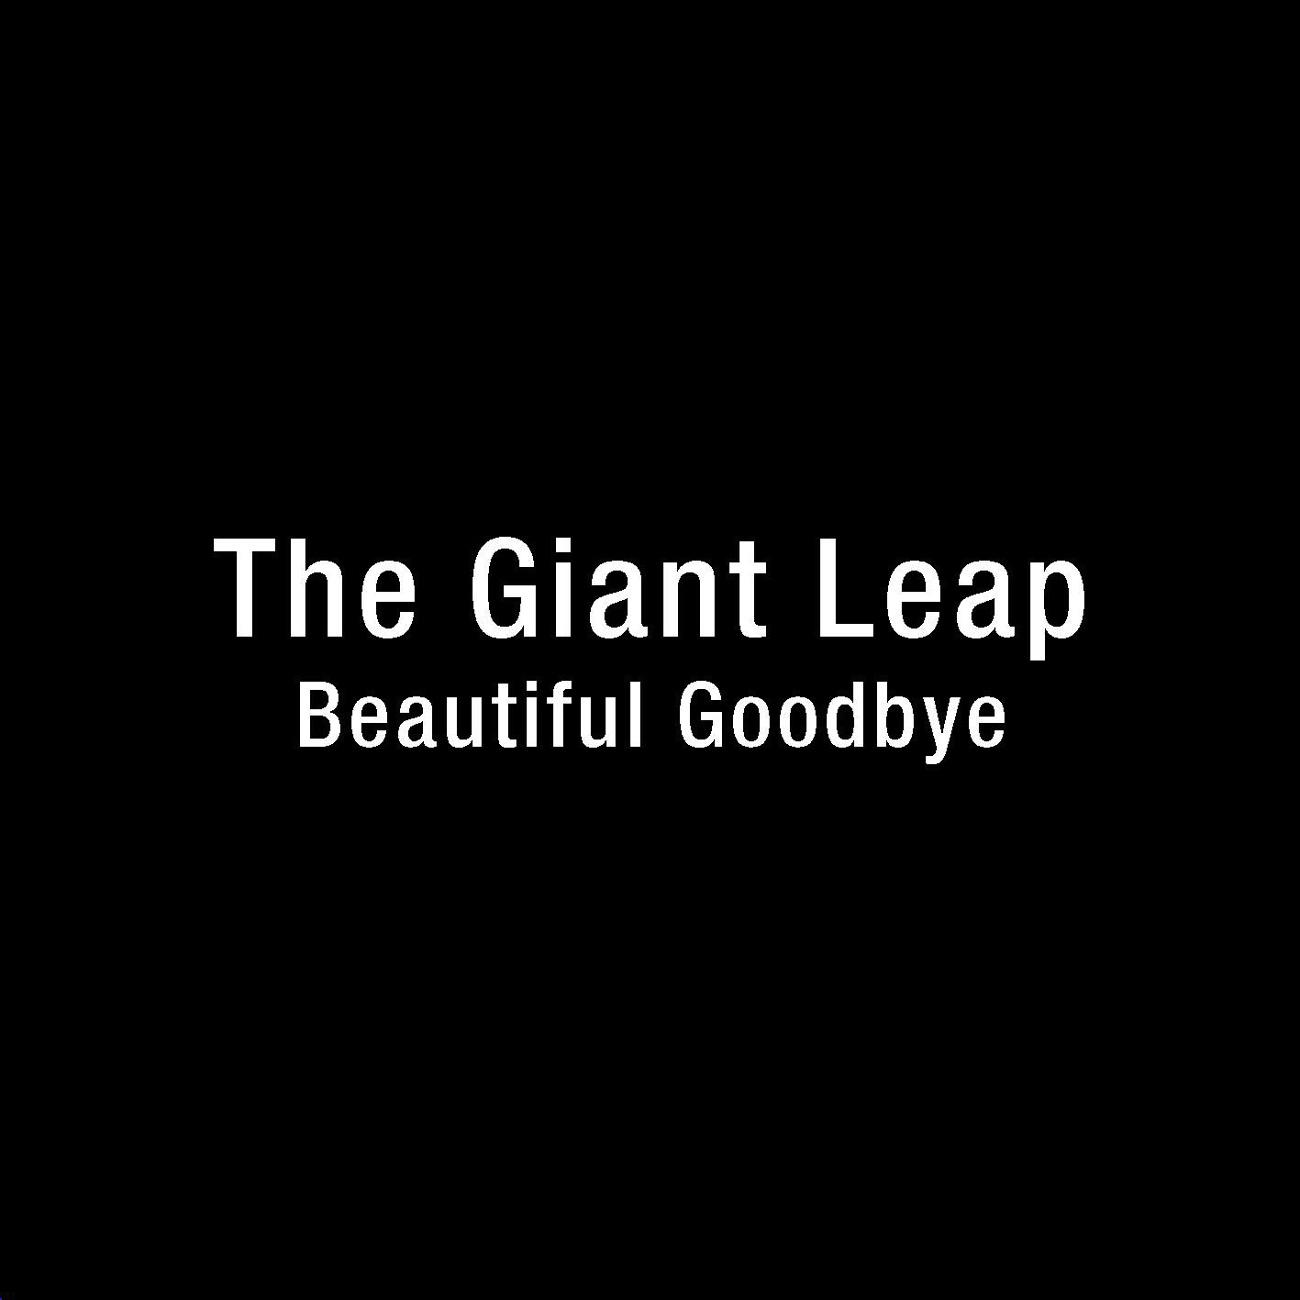 The Giant Leap - Beautiful Goodbye